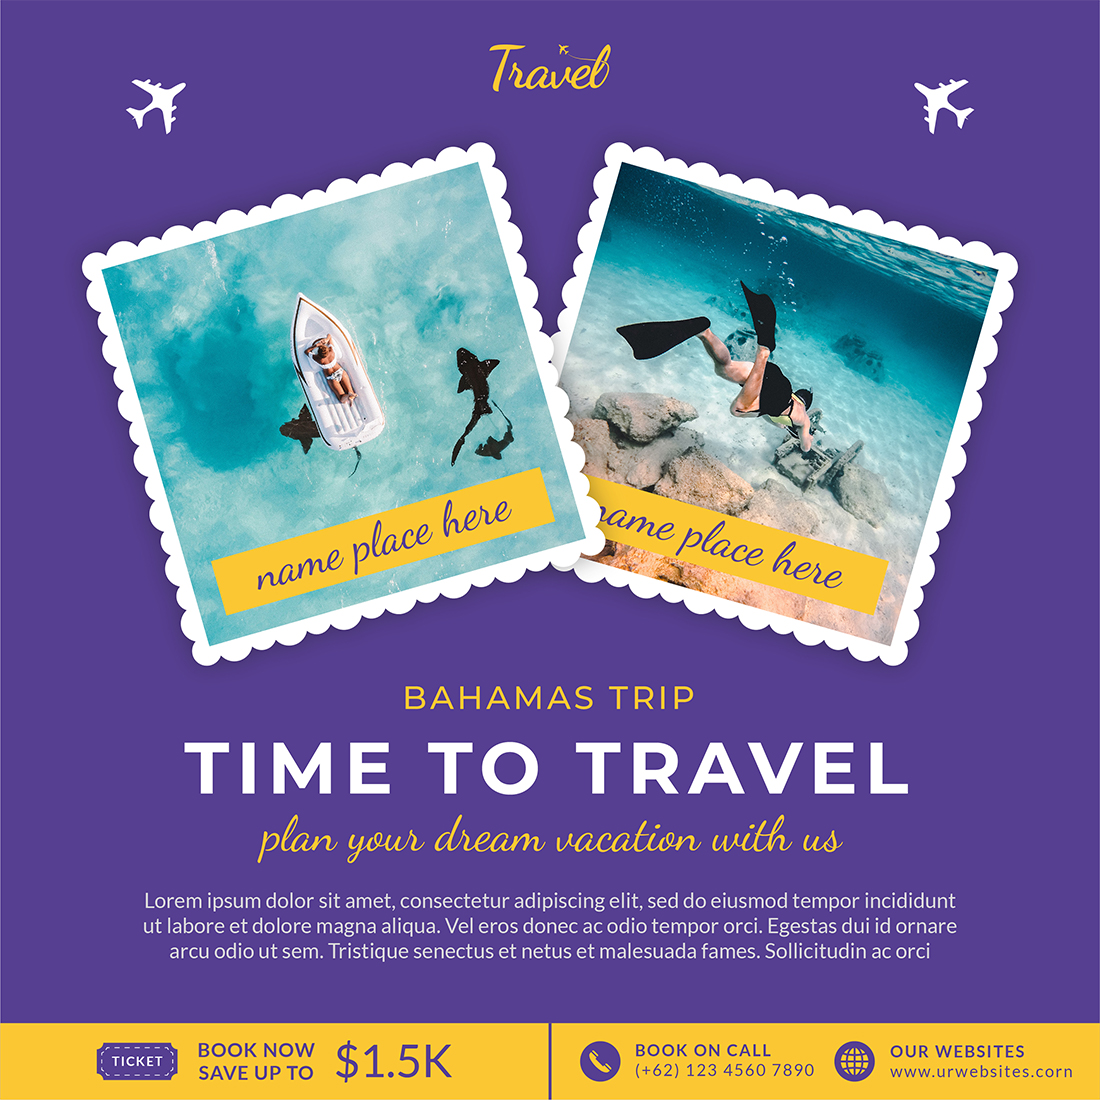 Travel & Tourism Social Media Post Templates Bahamas trip example.